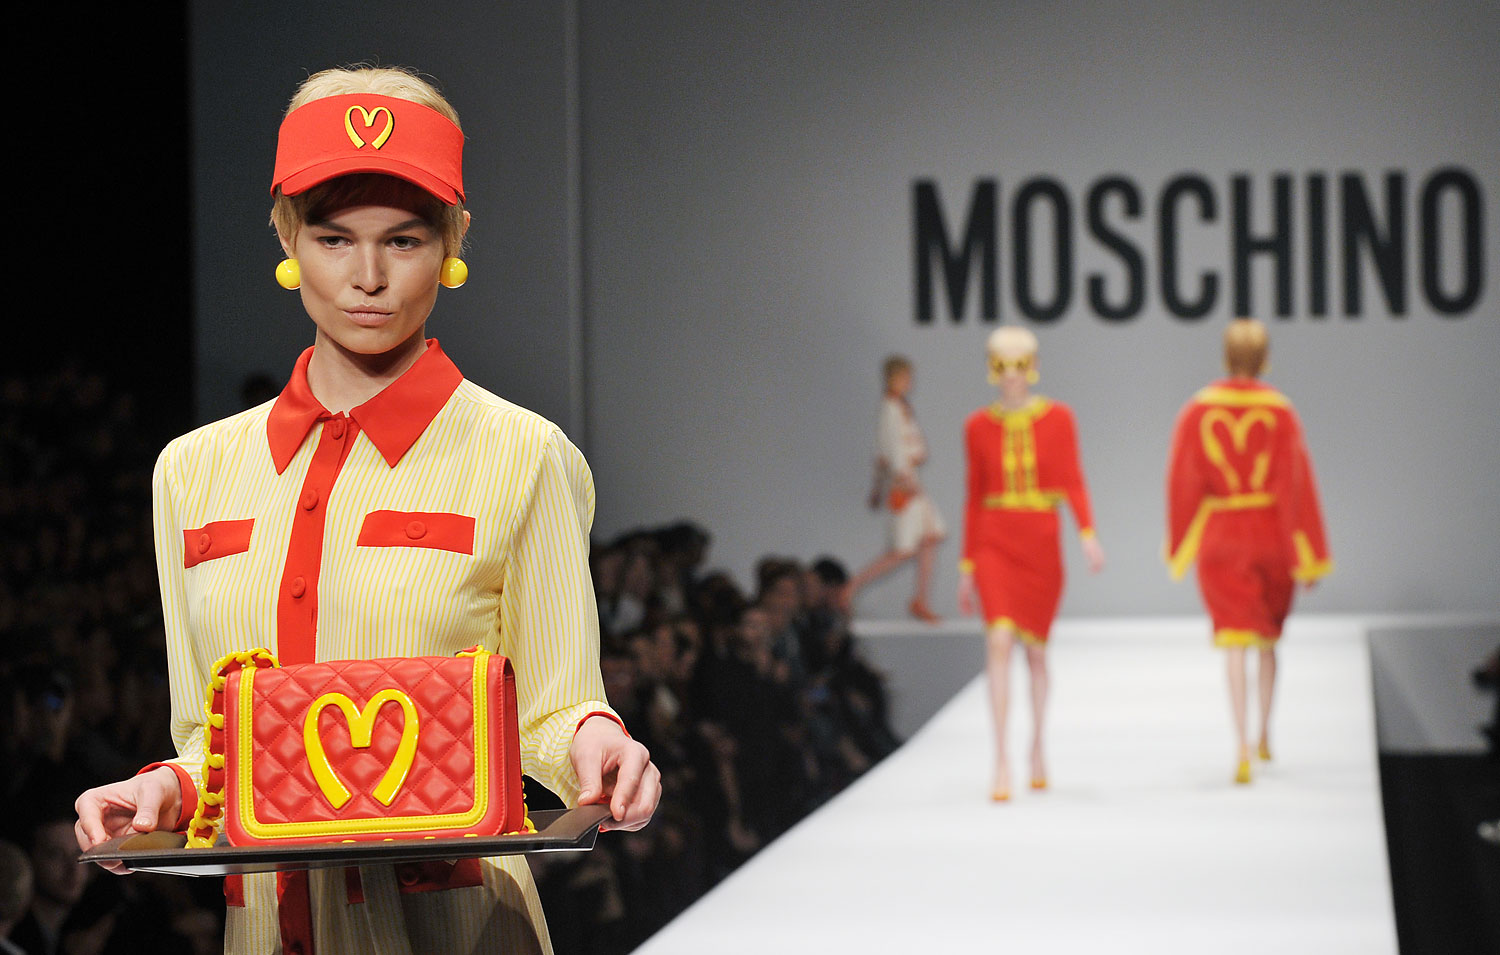 Moschino McDonalds Jeremy Scott Clothes at Milan Fashion Week | TIME.com